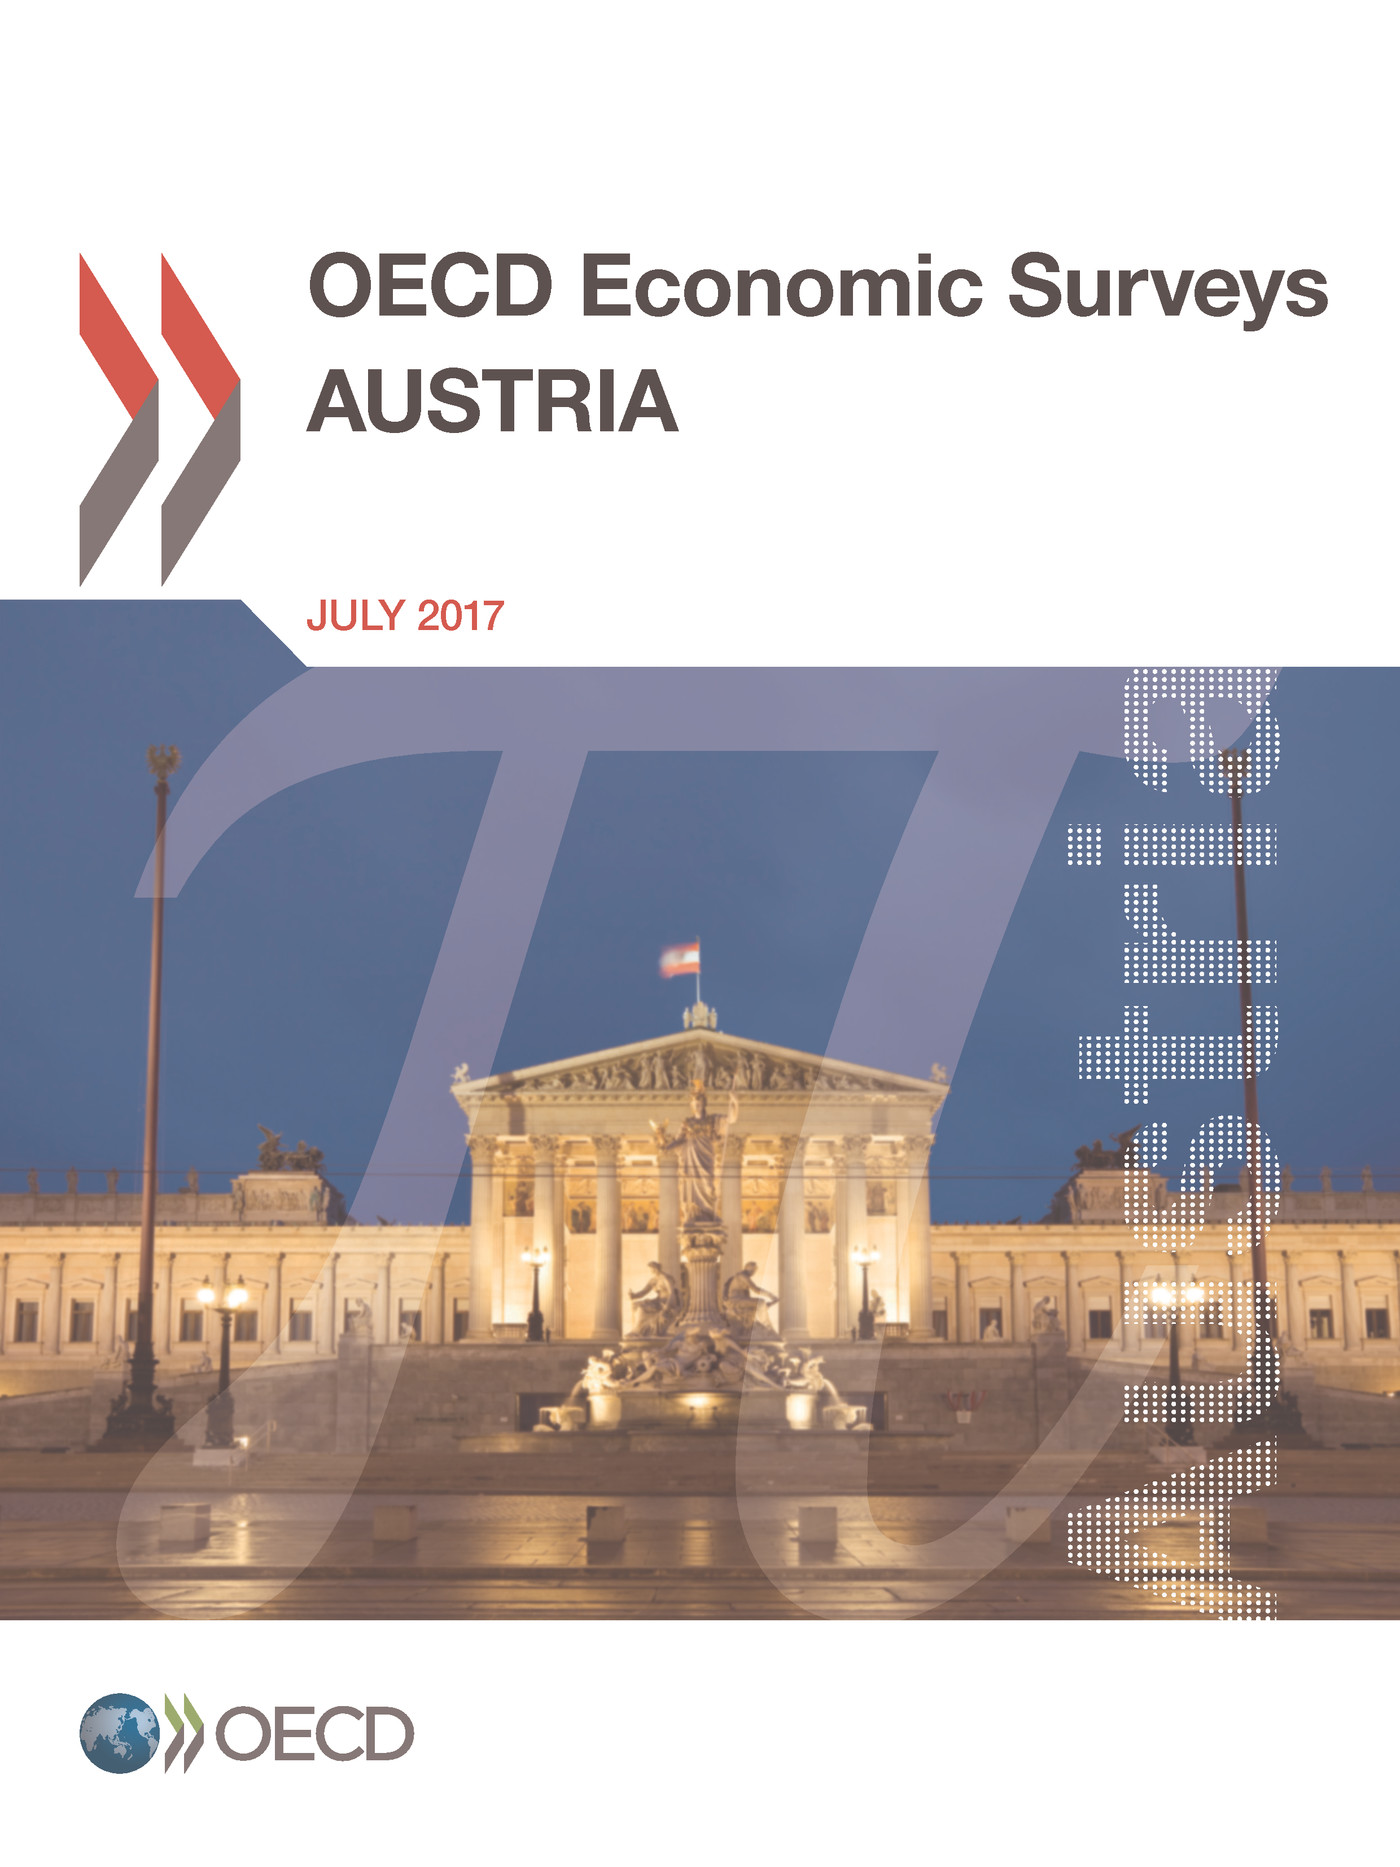 OECD Economic Surveys: Austria 2017 -  Collectif - OCDE / OECD